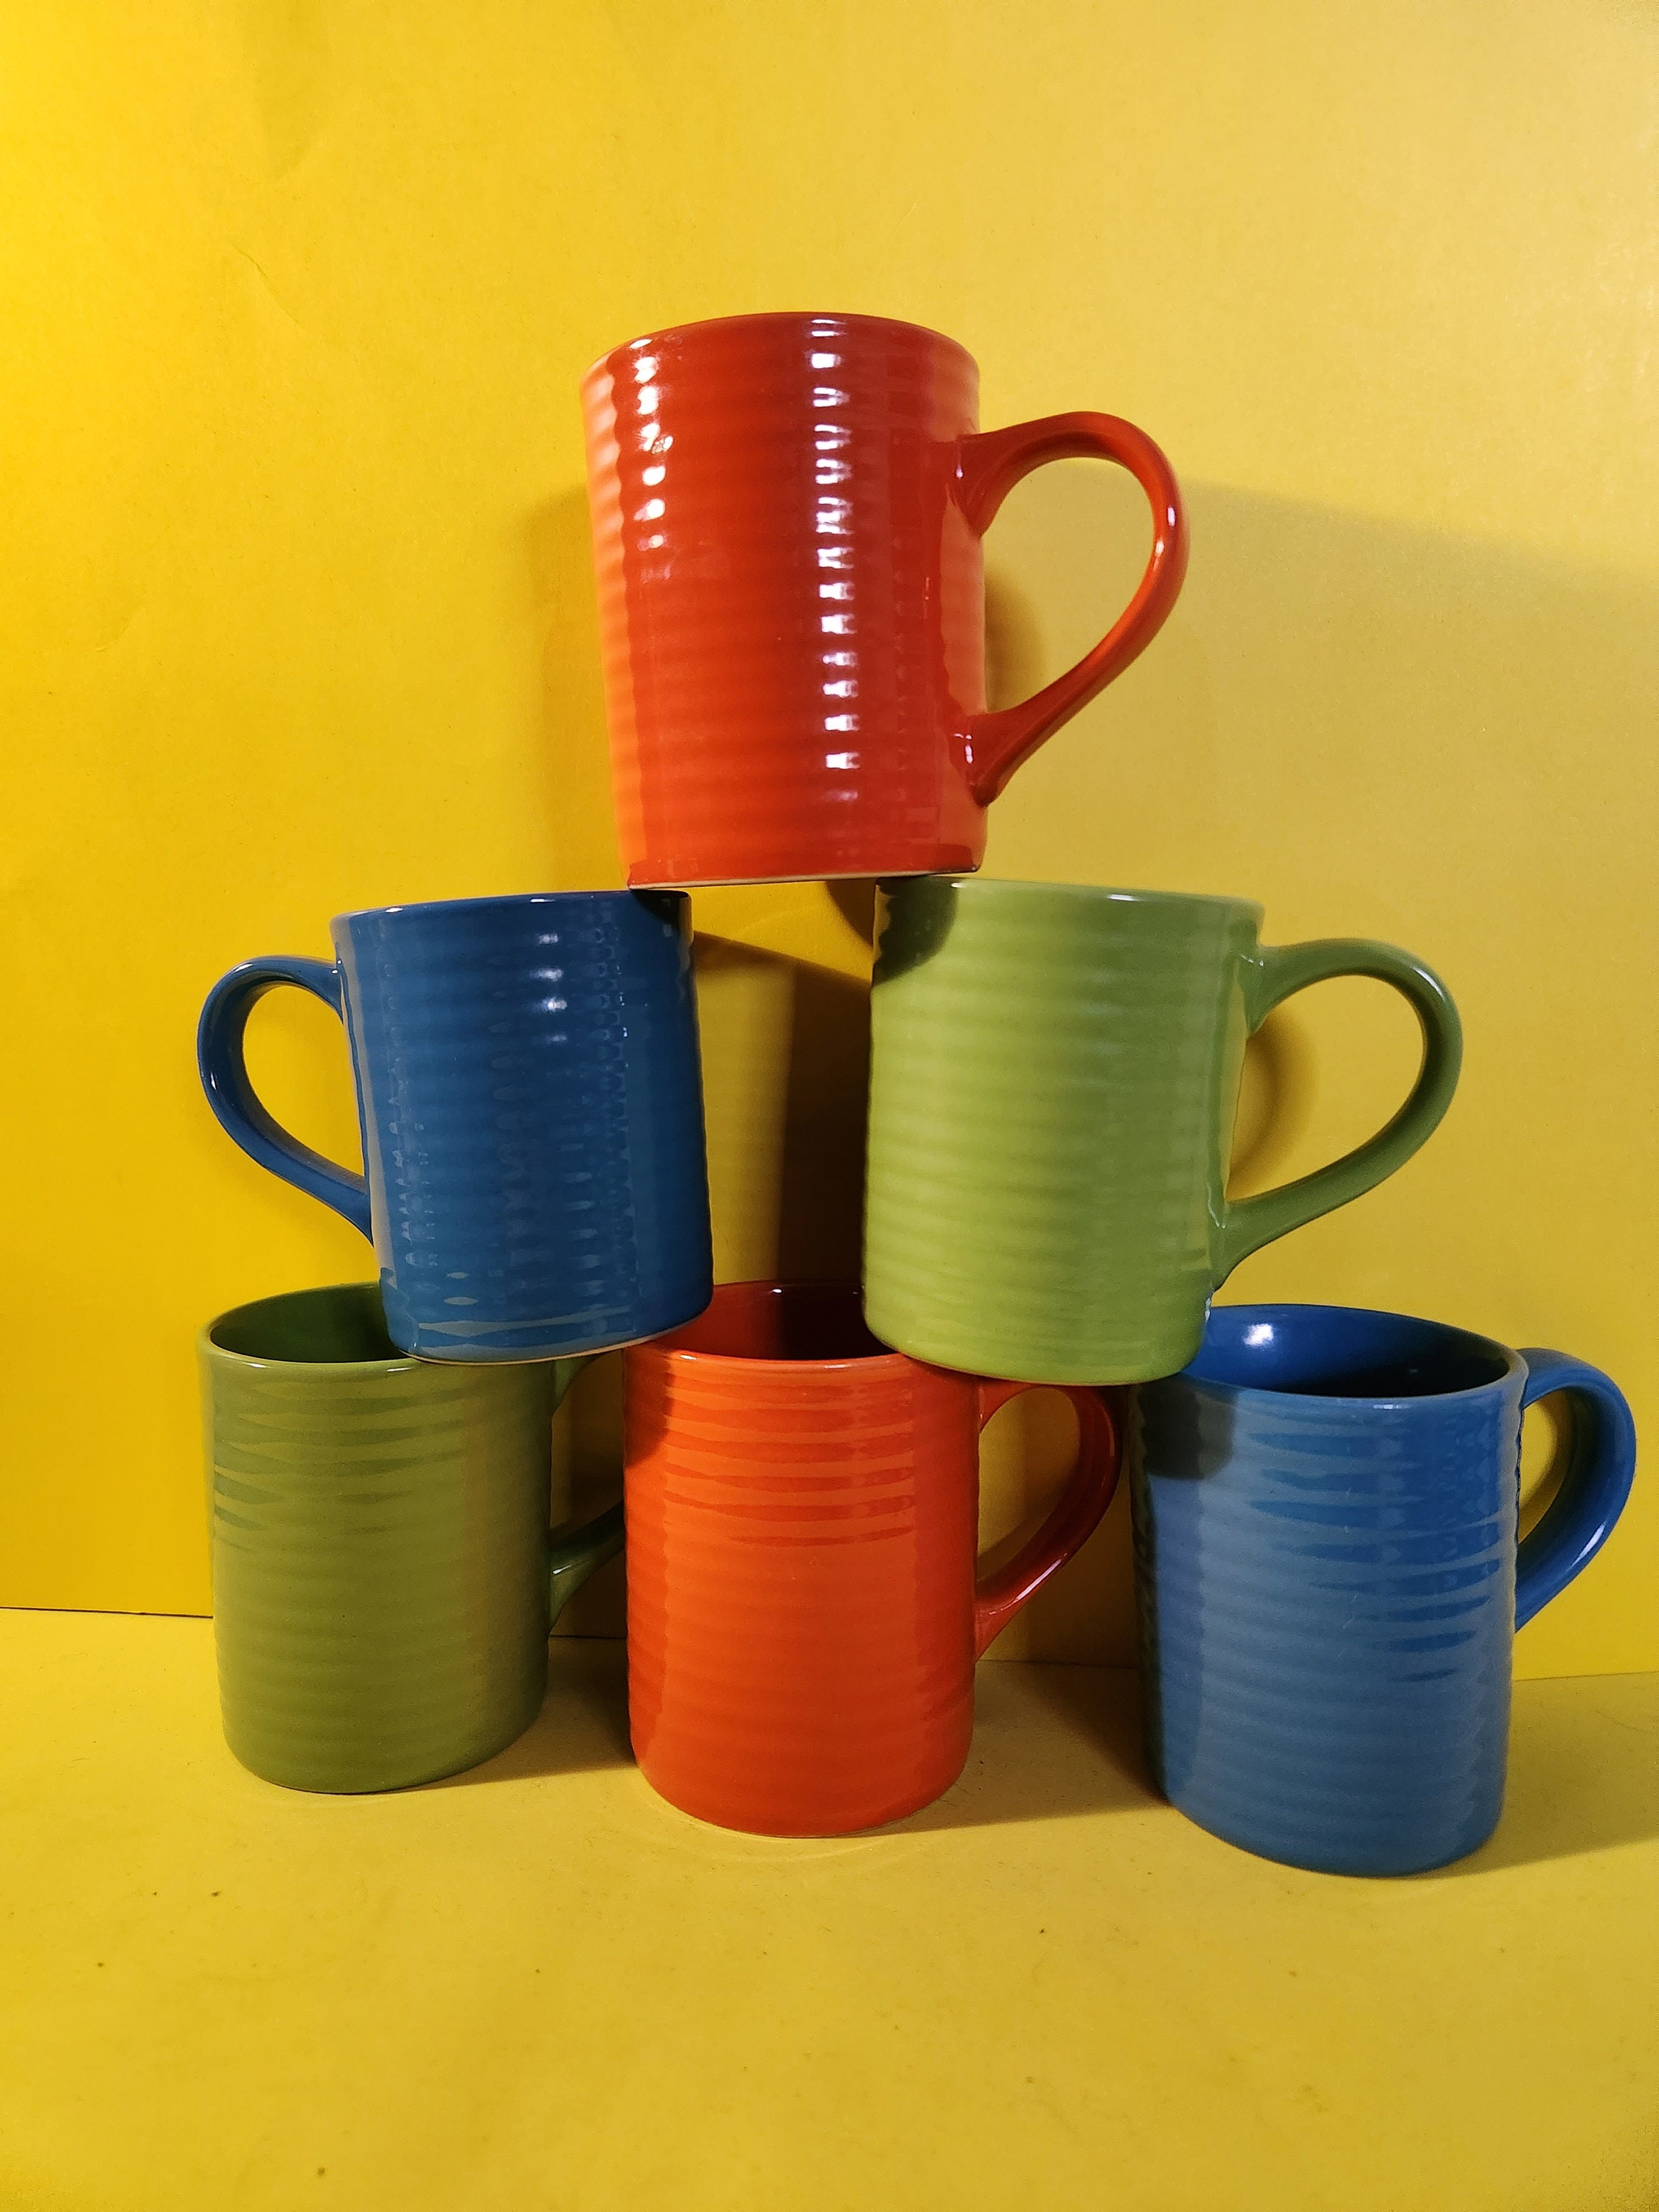 Leadiy Black Glass Coffee Mug with Lid, Clear Glass Coffee Cups, Classical Vertical Stripes Coffee Mugs for Latte Juice Tea 12.5 Ounces